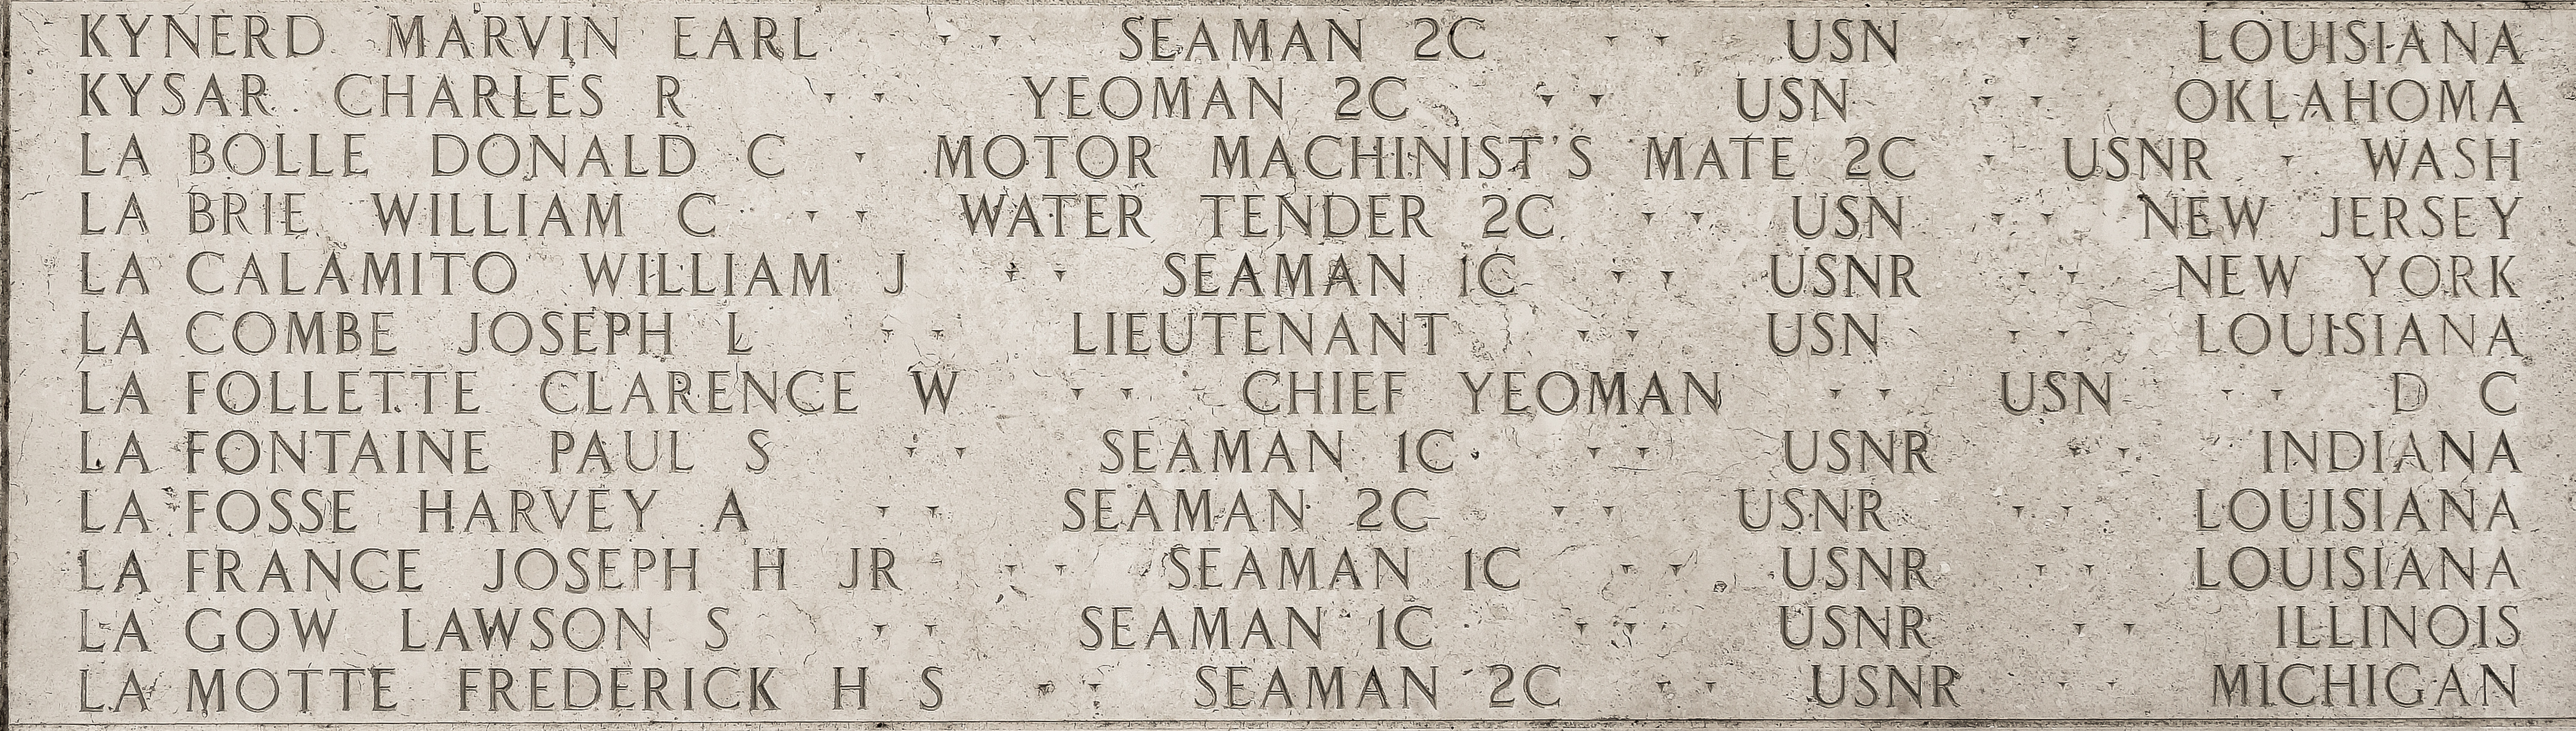 Frederick H. S. La Motte, Seaman Second Class